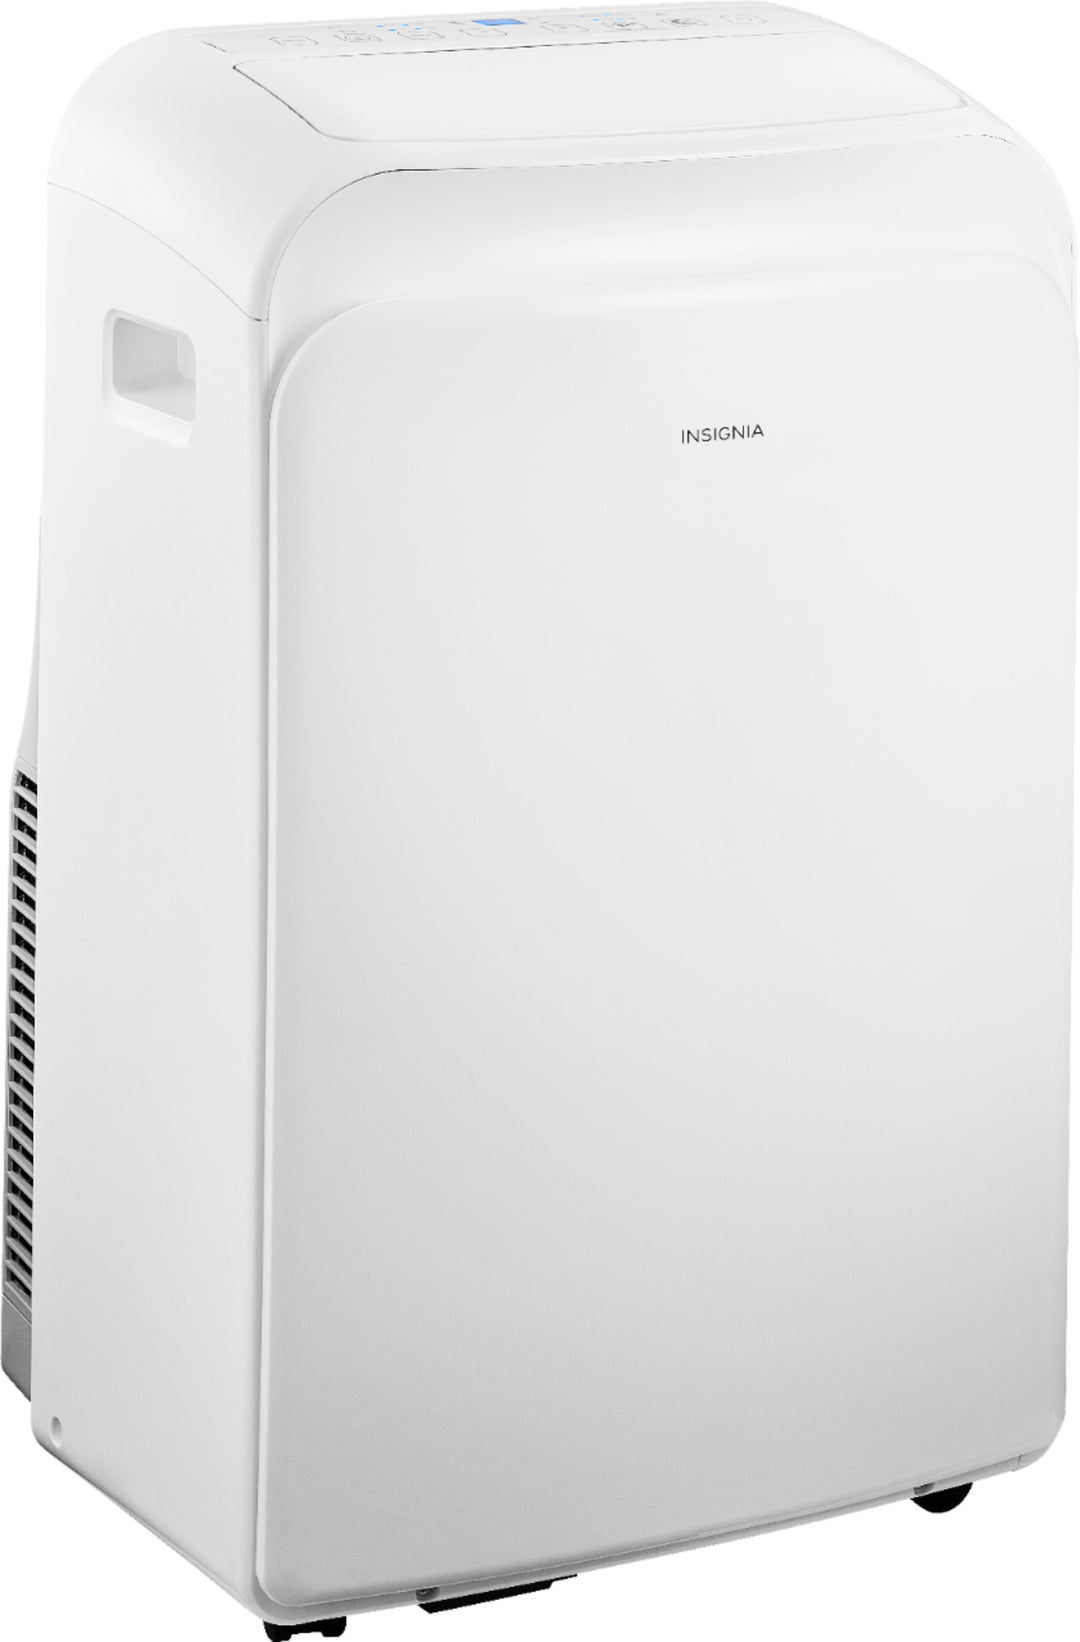 Insignia™ - 250 Sq. Ft. Portable Air Conditioner - White_2